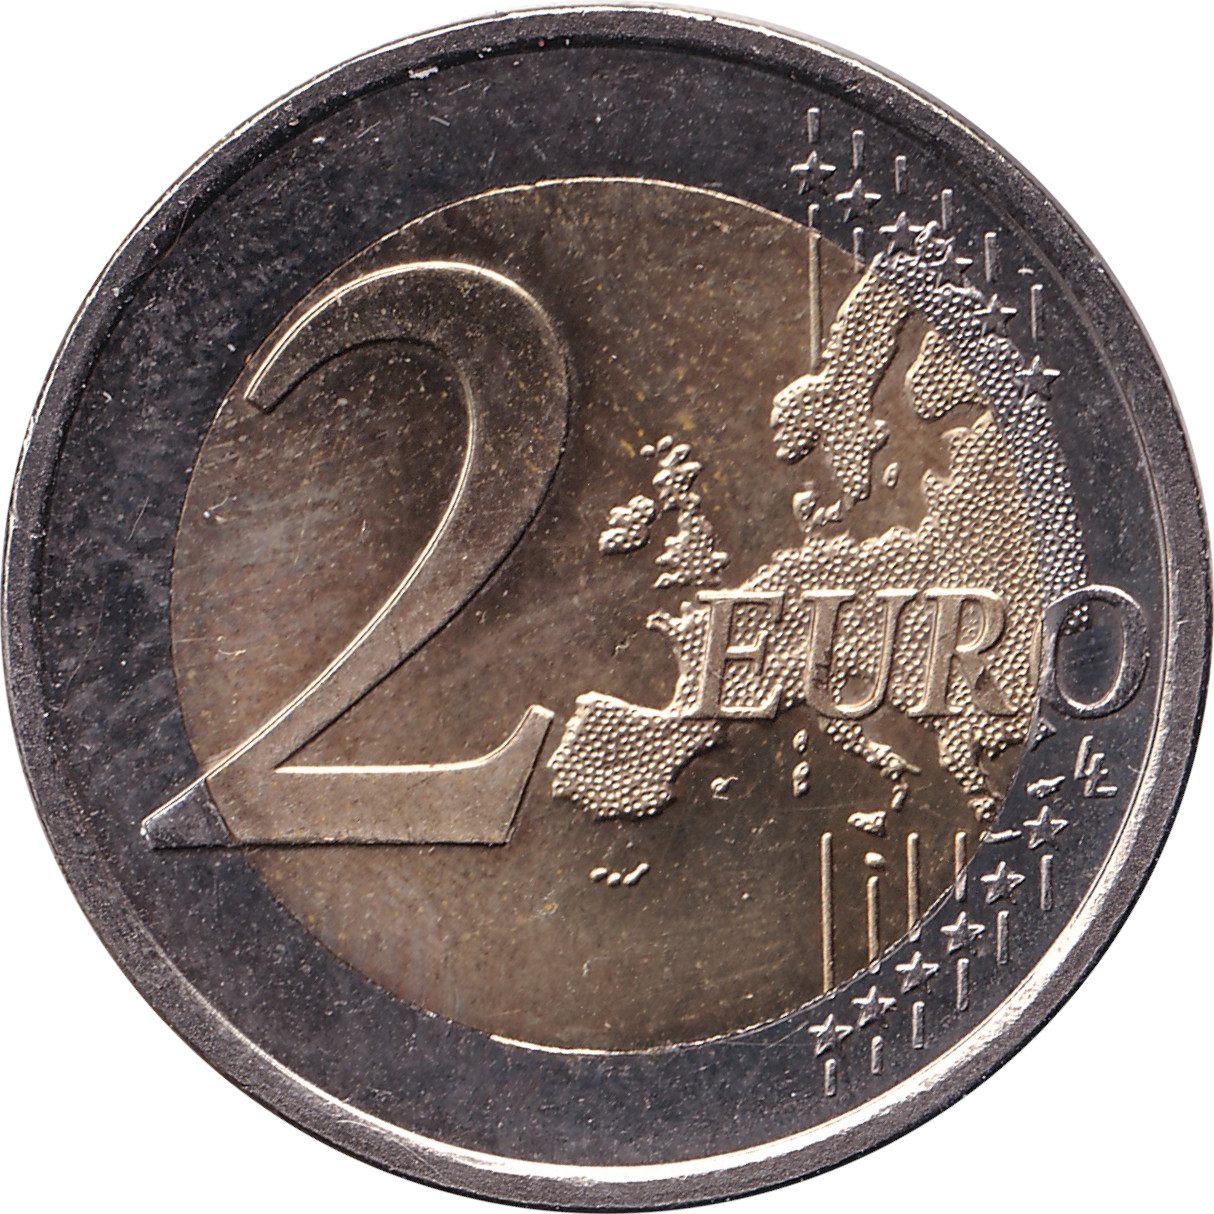 2 euro - France